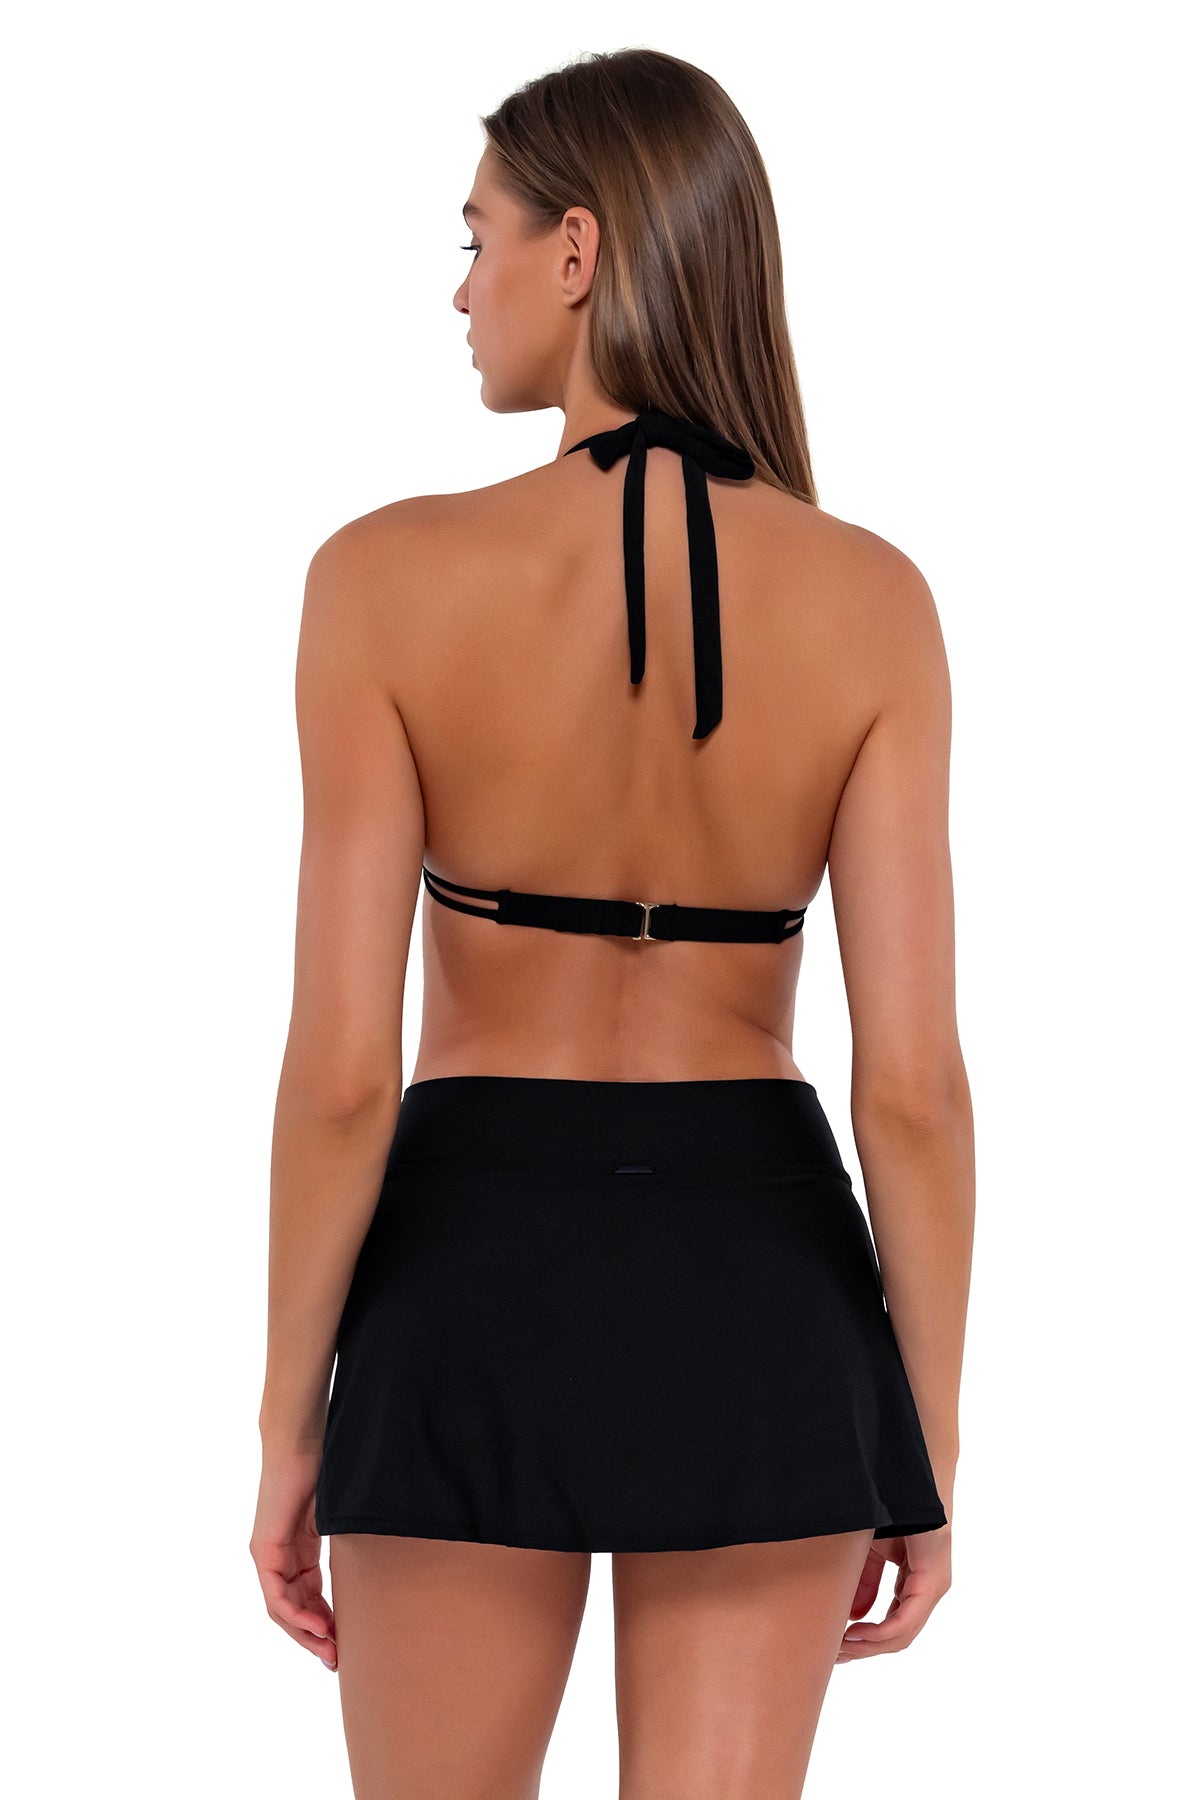 Back pose #1 of Daria wearing Sunsets Black Summer Lovin Swim Skirt with matching